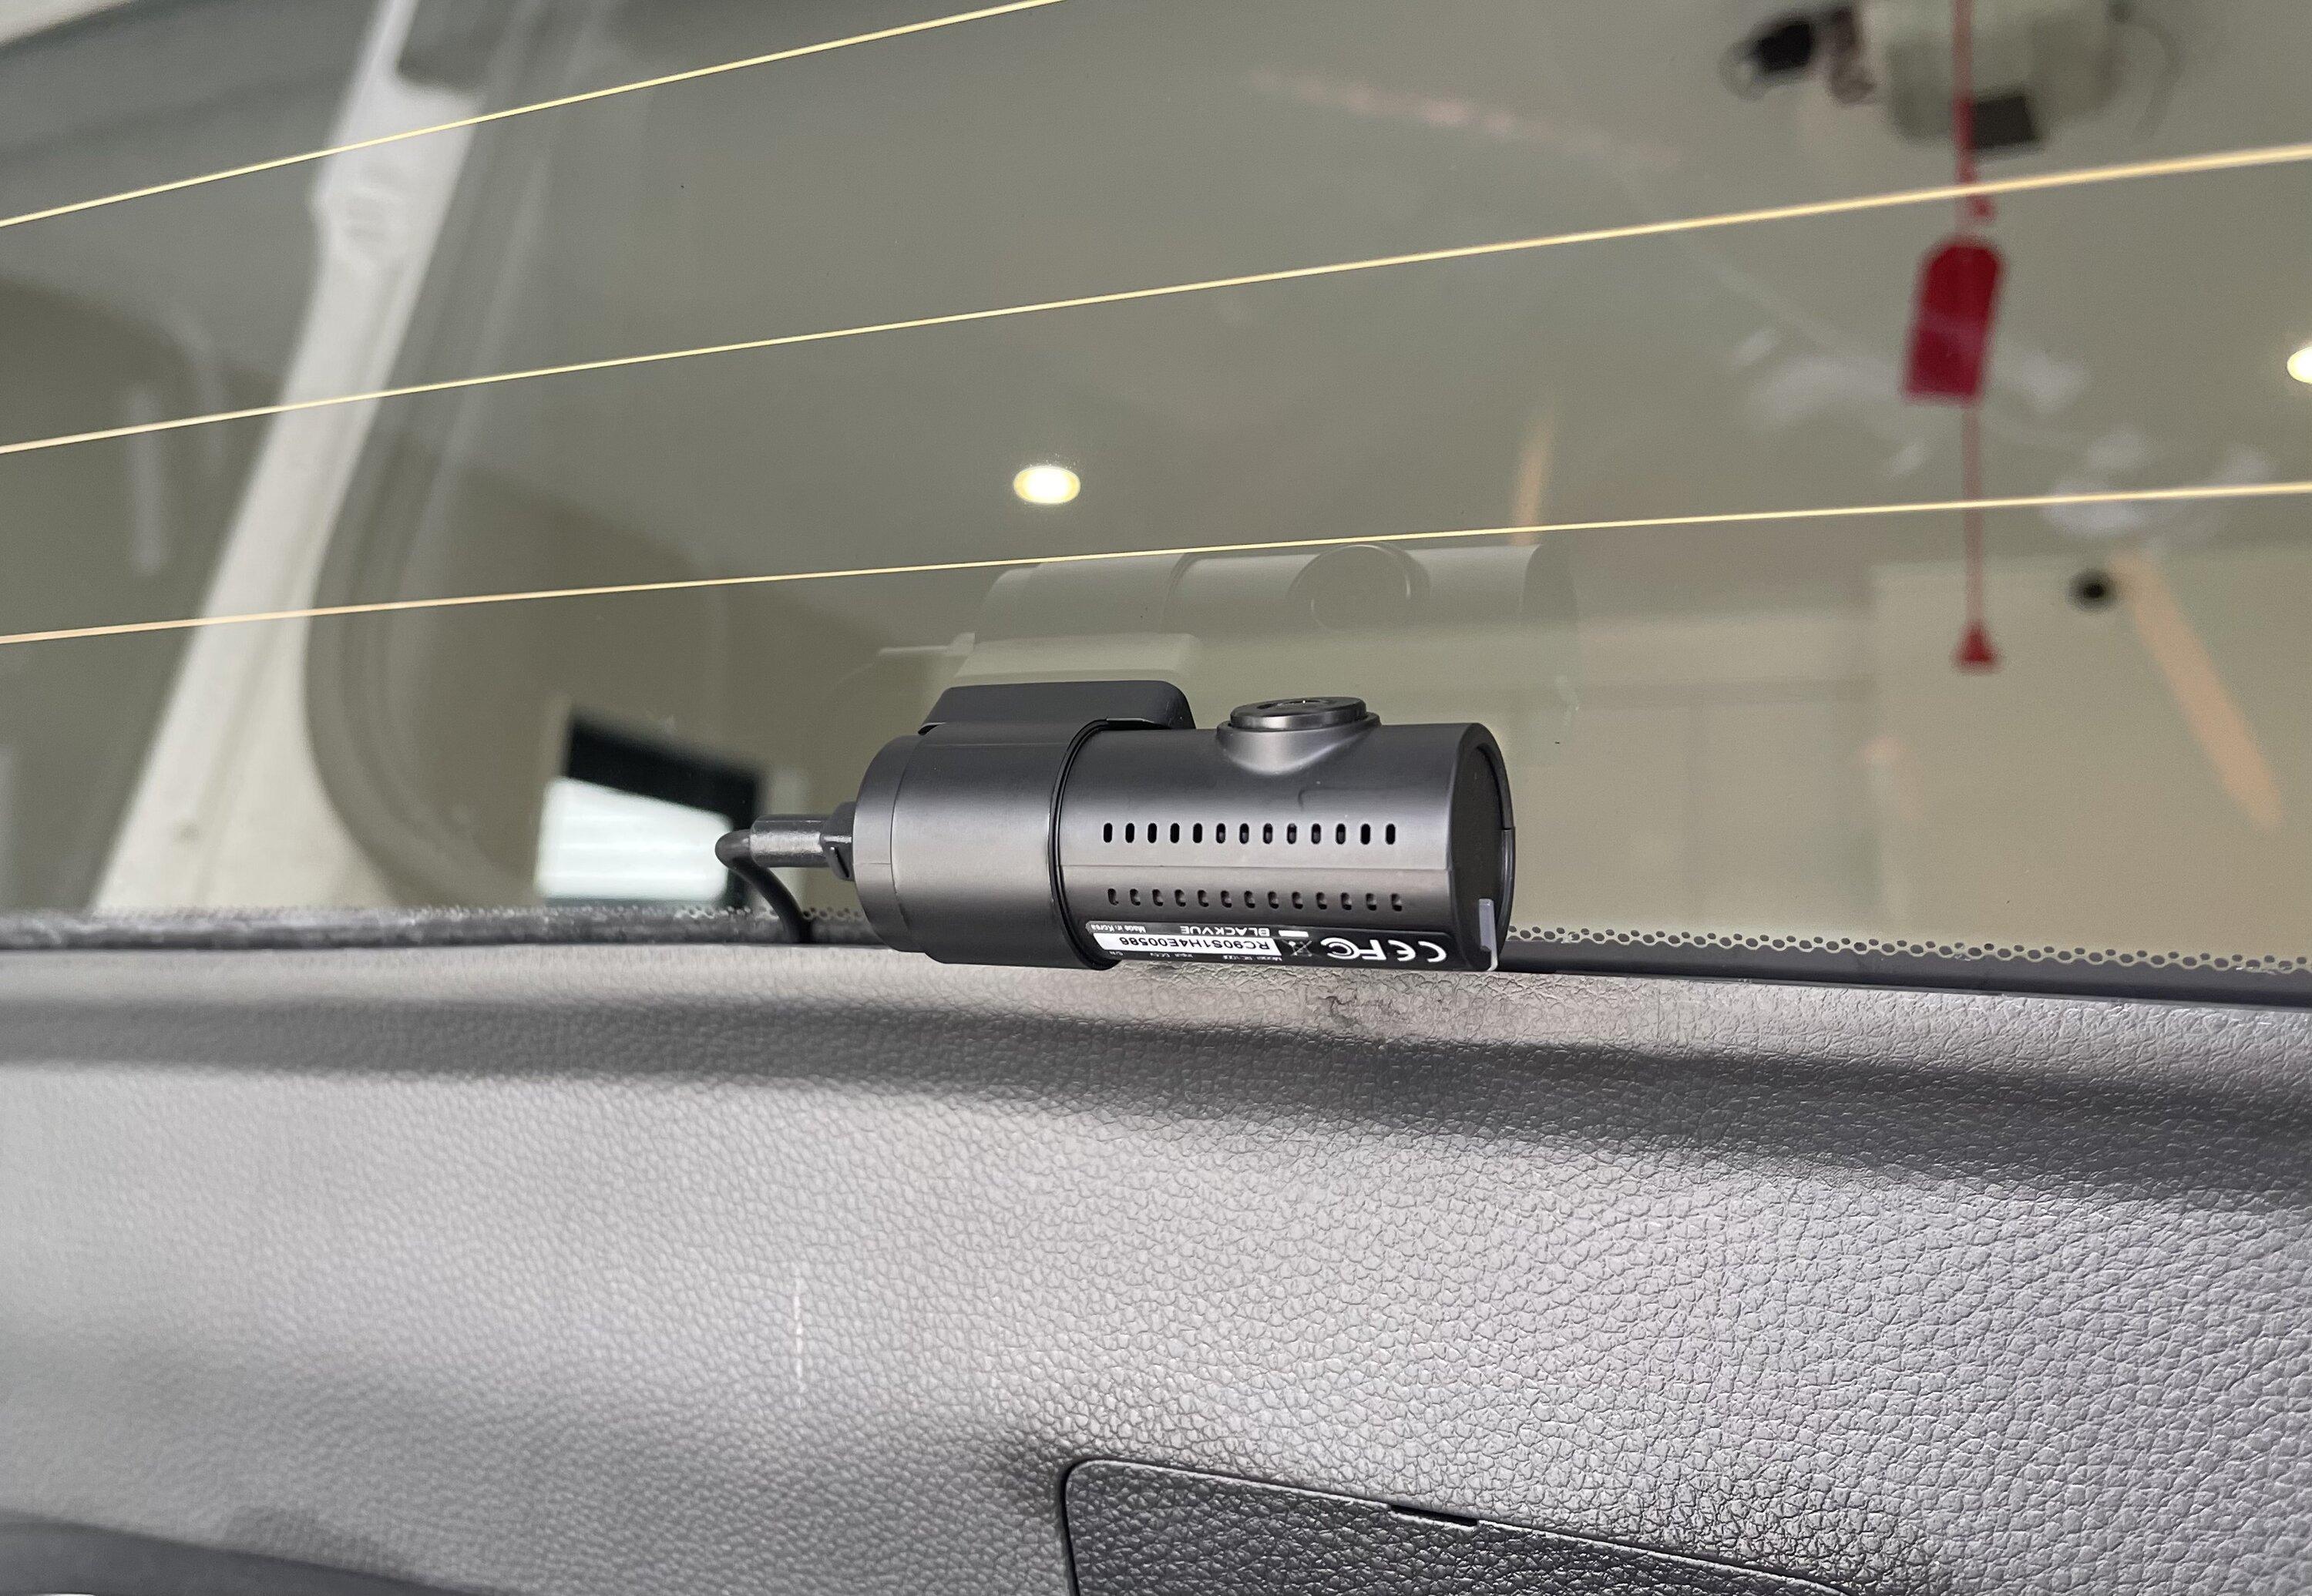 Dash cam installed - no tools, no modifications - Unofficial Honda